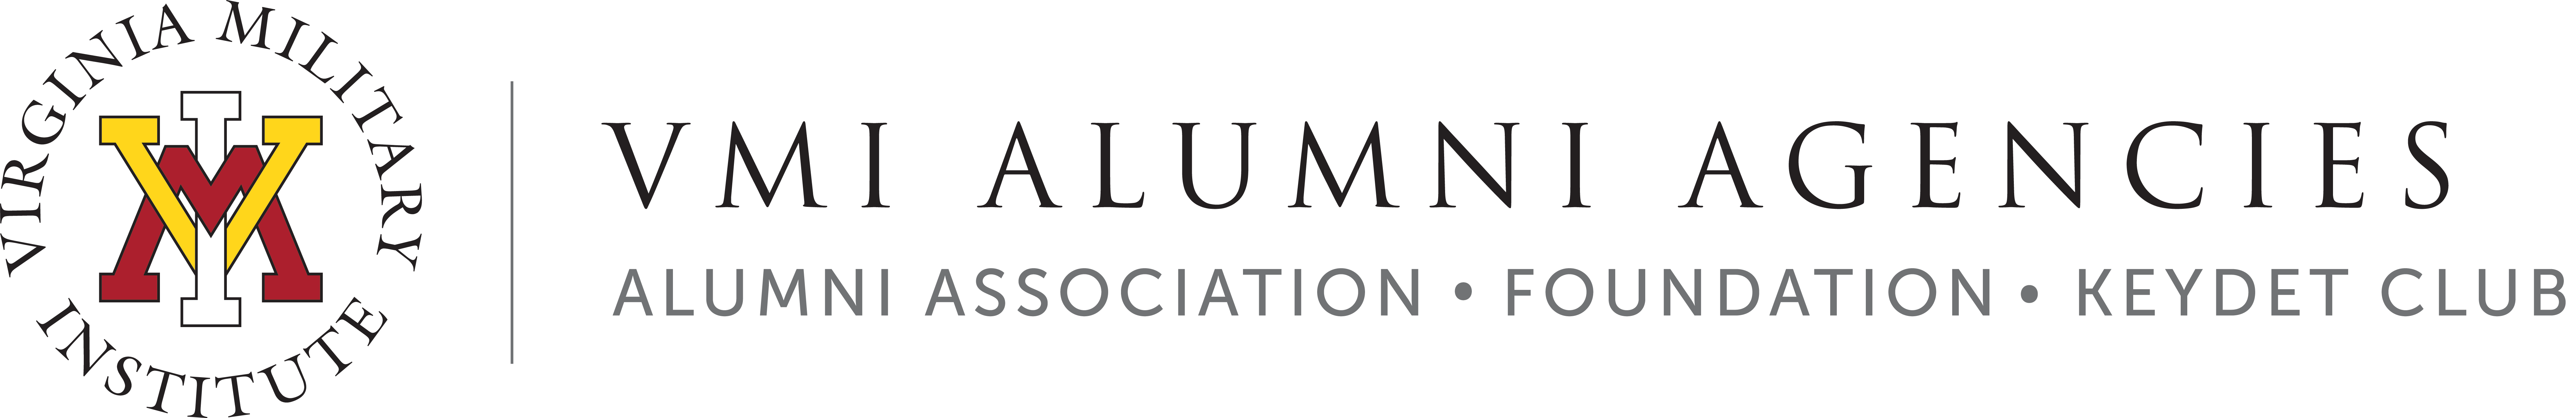 Alumni Agencies logo